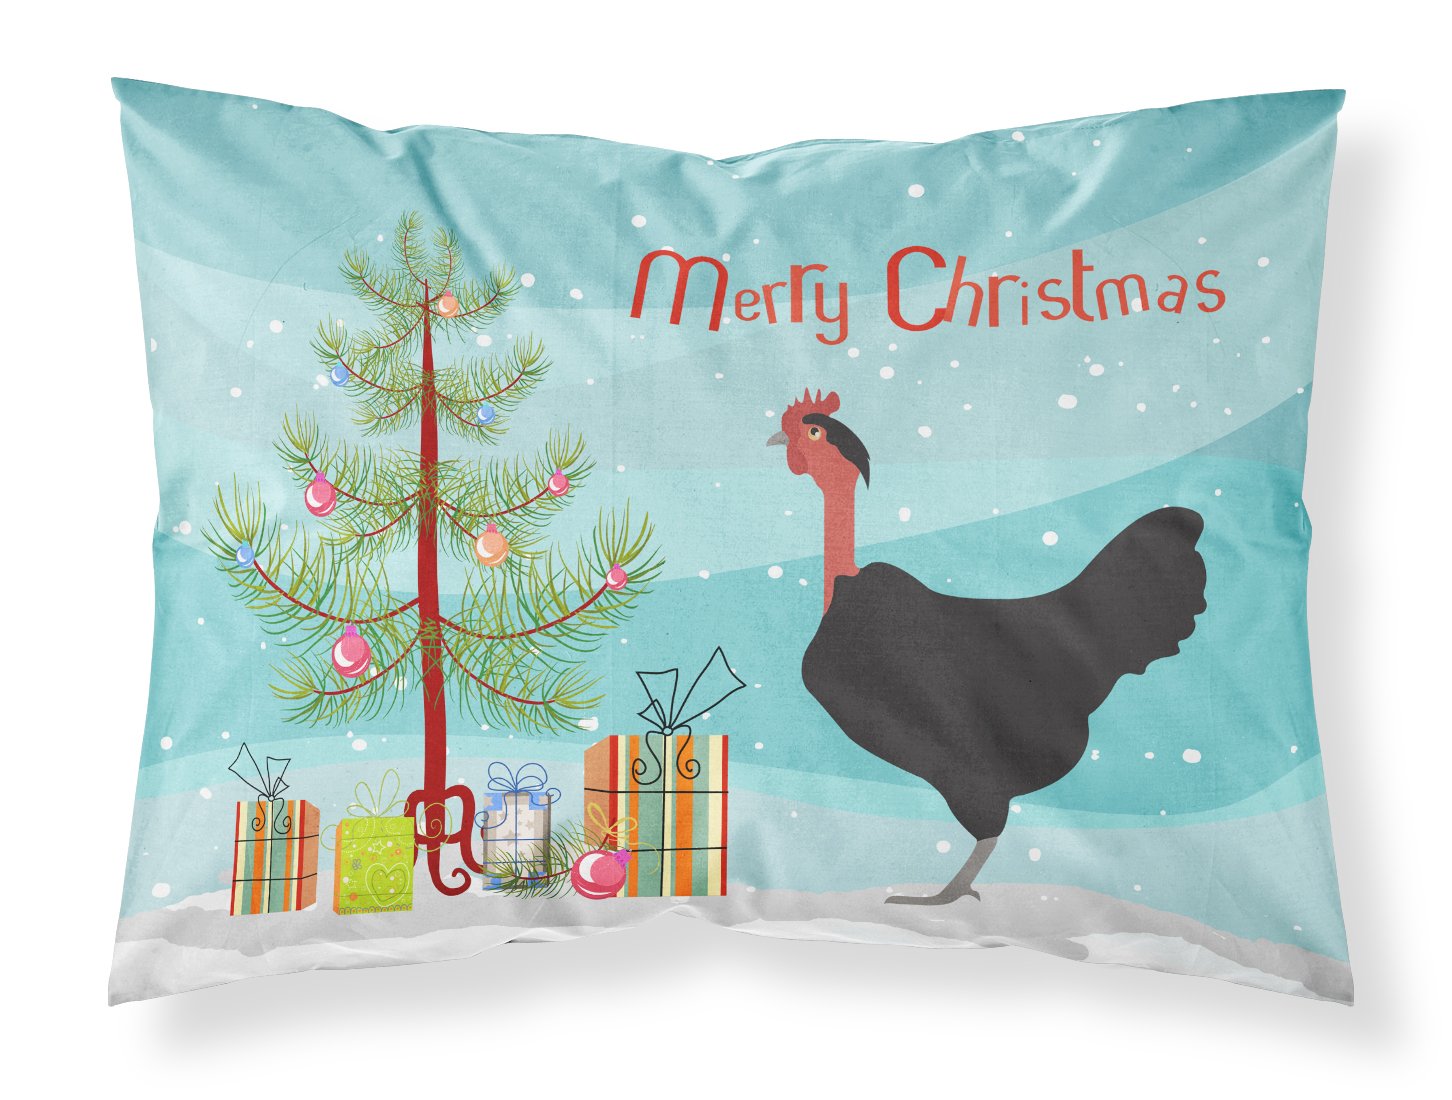 Naked Neck Chicken Christmas Fabric Standard Pillowcase BB9206PILLOWCASE by Caroline's Treasures